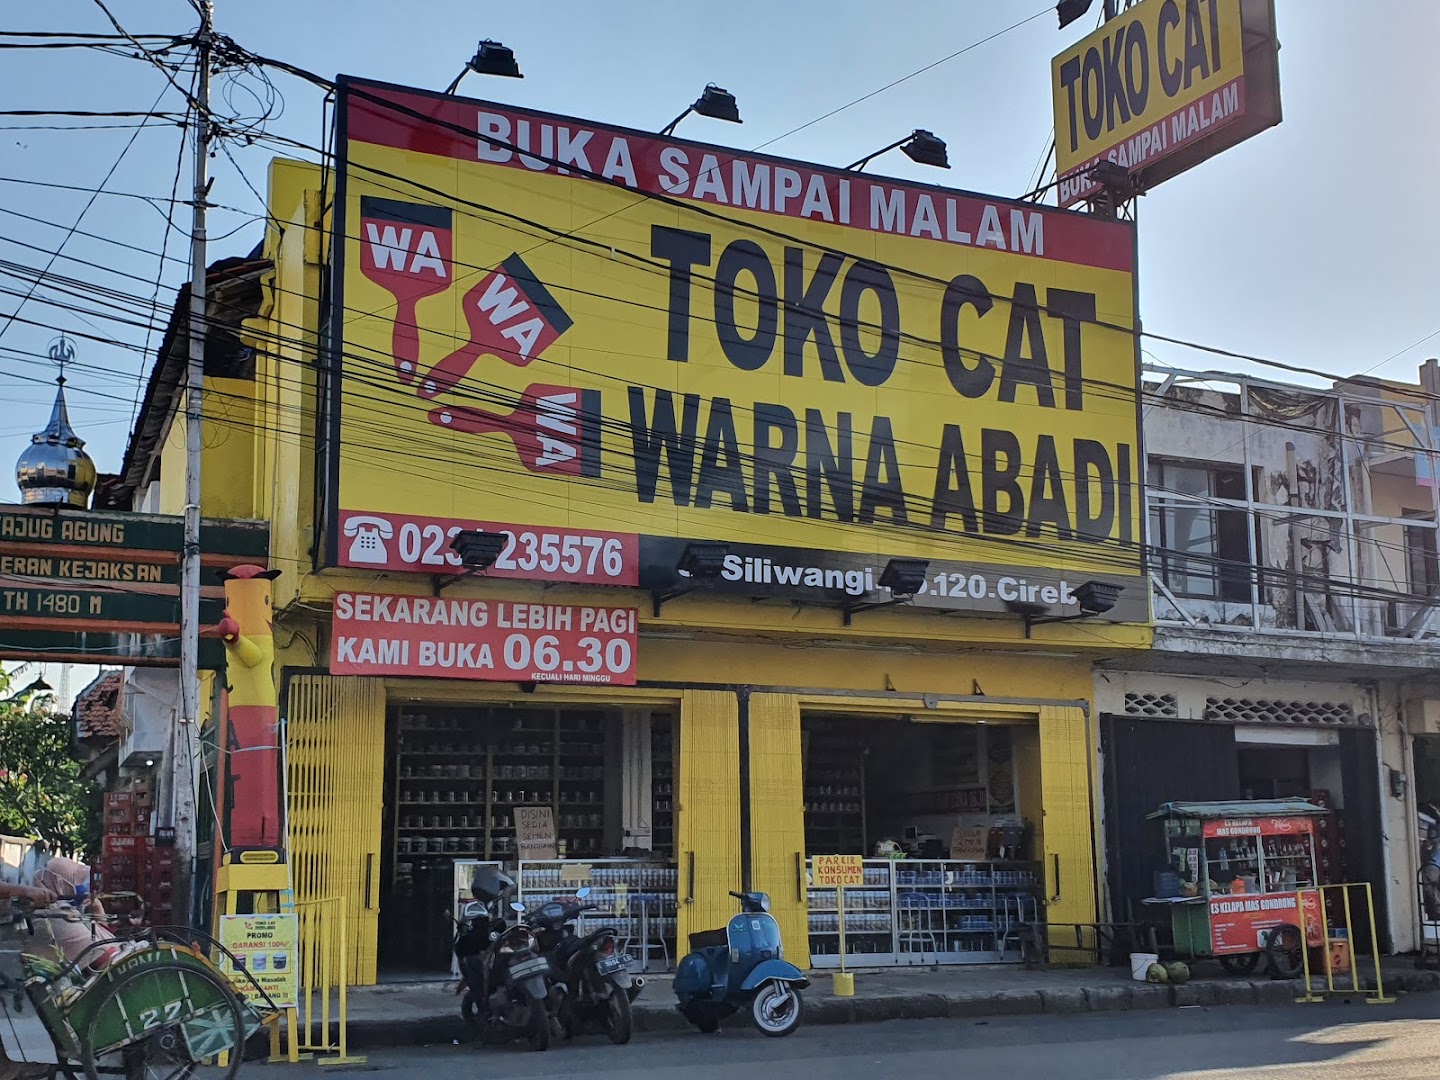 Gambar Toko Cat Warna Abadi Cirebon